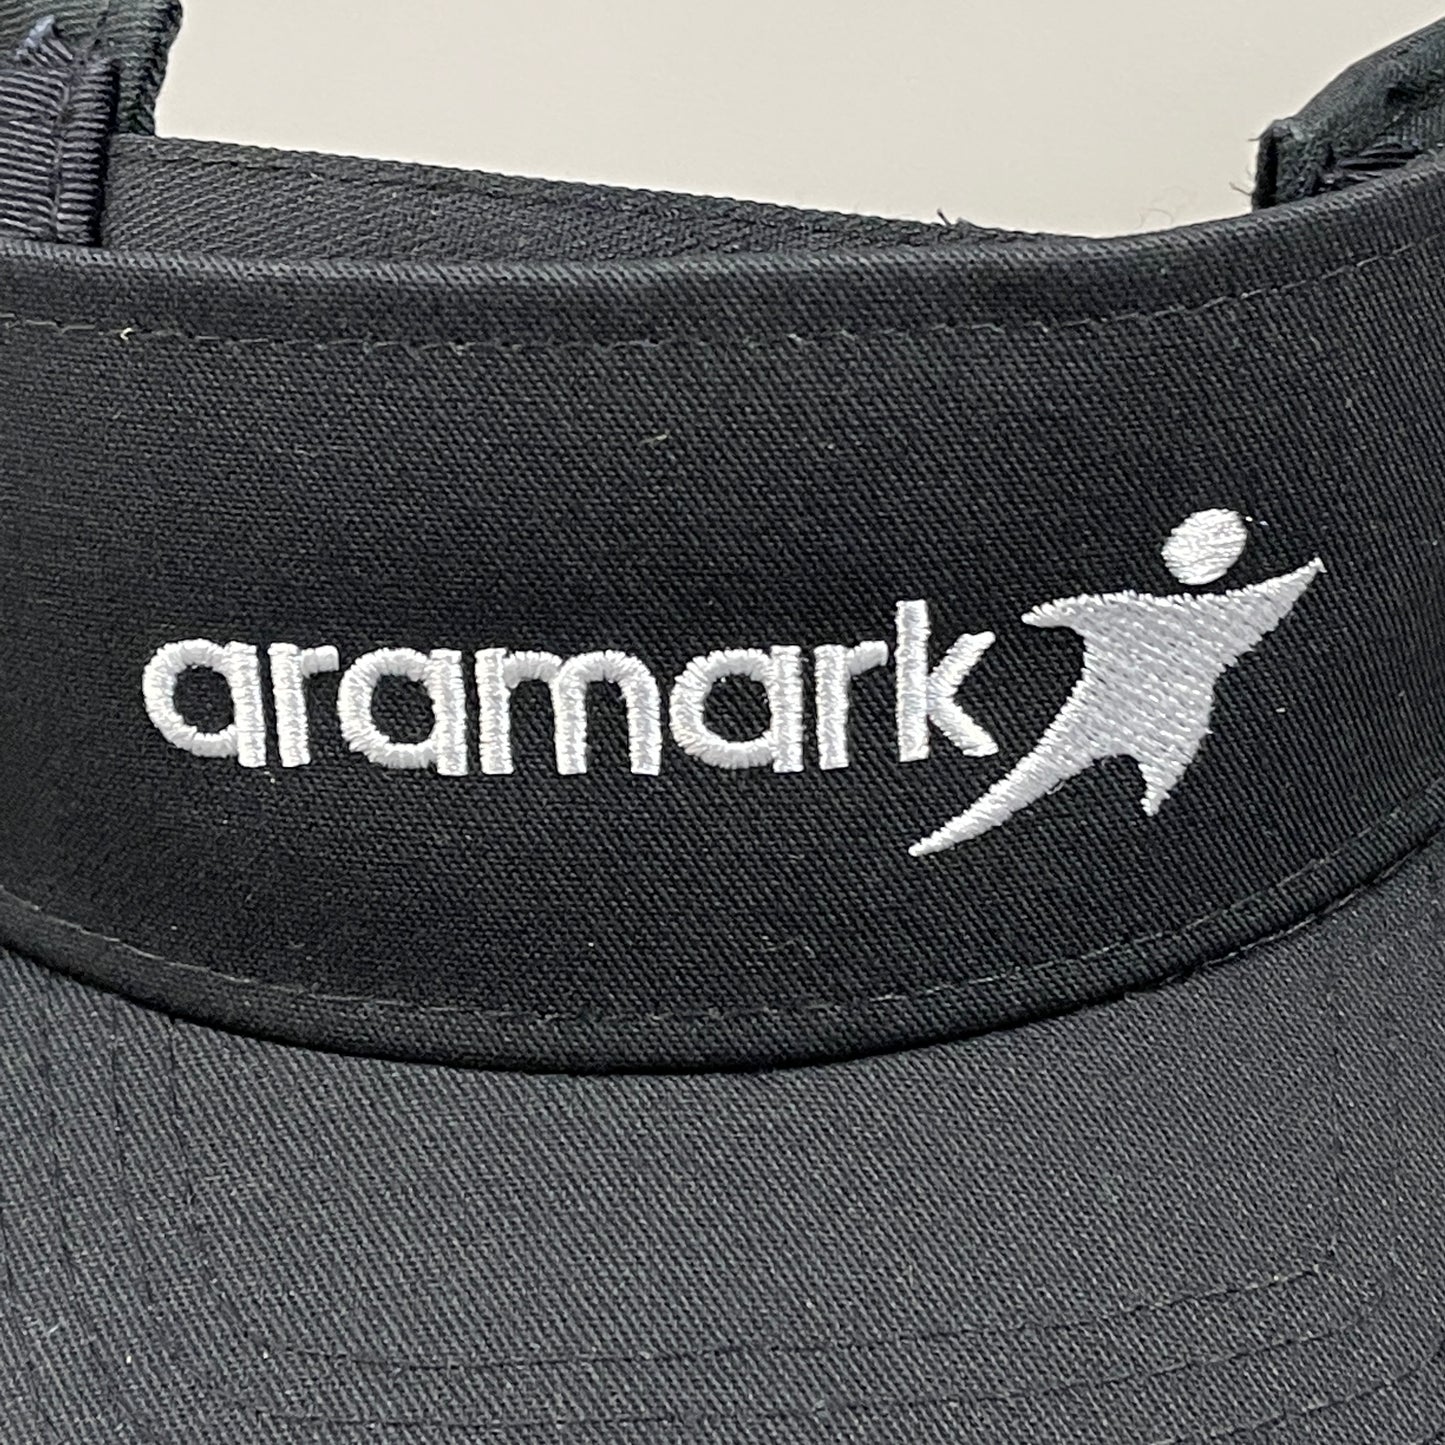 ARAMARK Visor Cap Adjustable Hat (Wearguard) w/ Embroidered Logo Black (New)